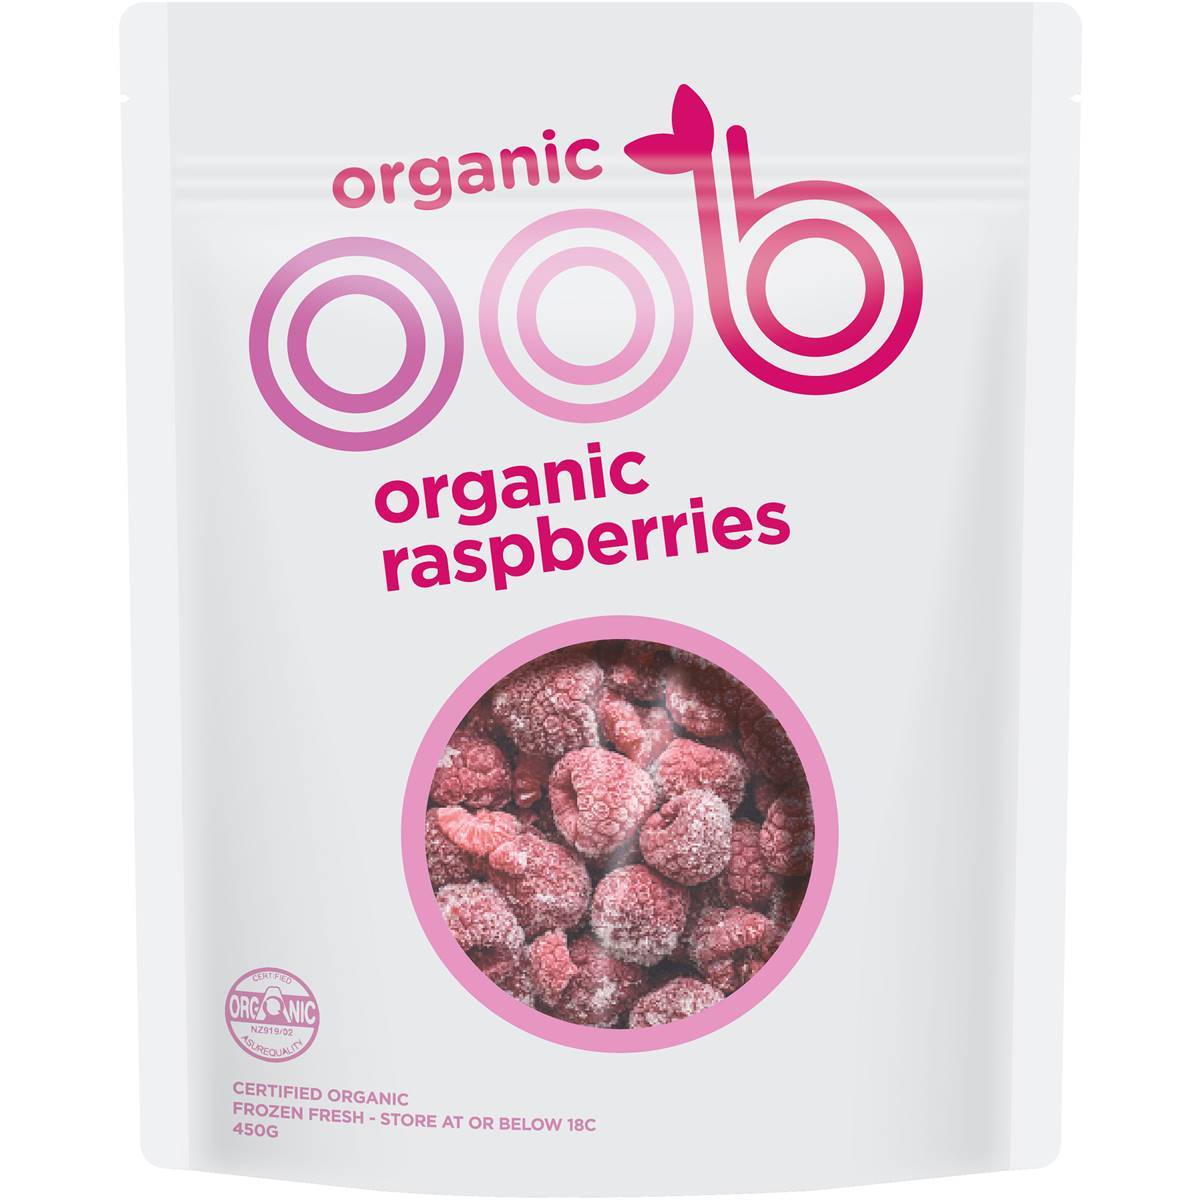 Oob Organic Raspberries 450g